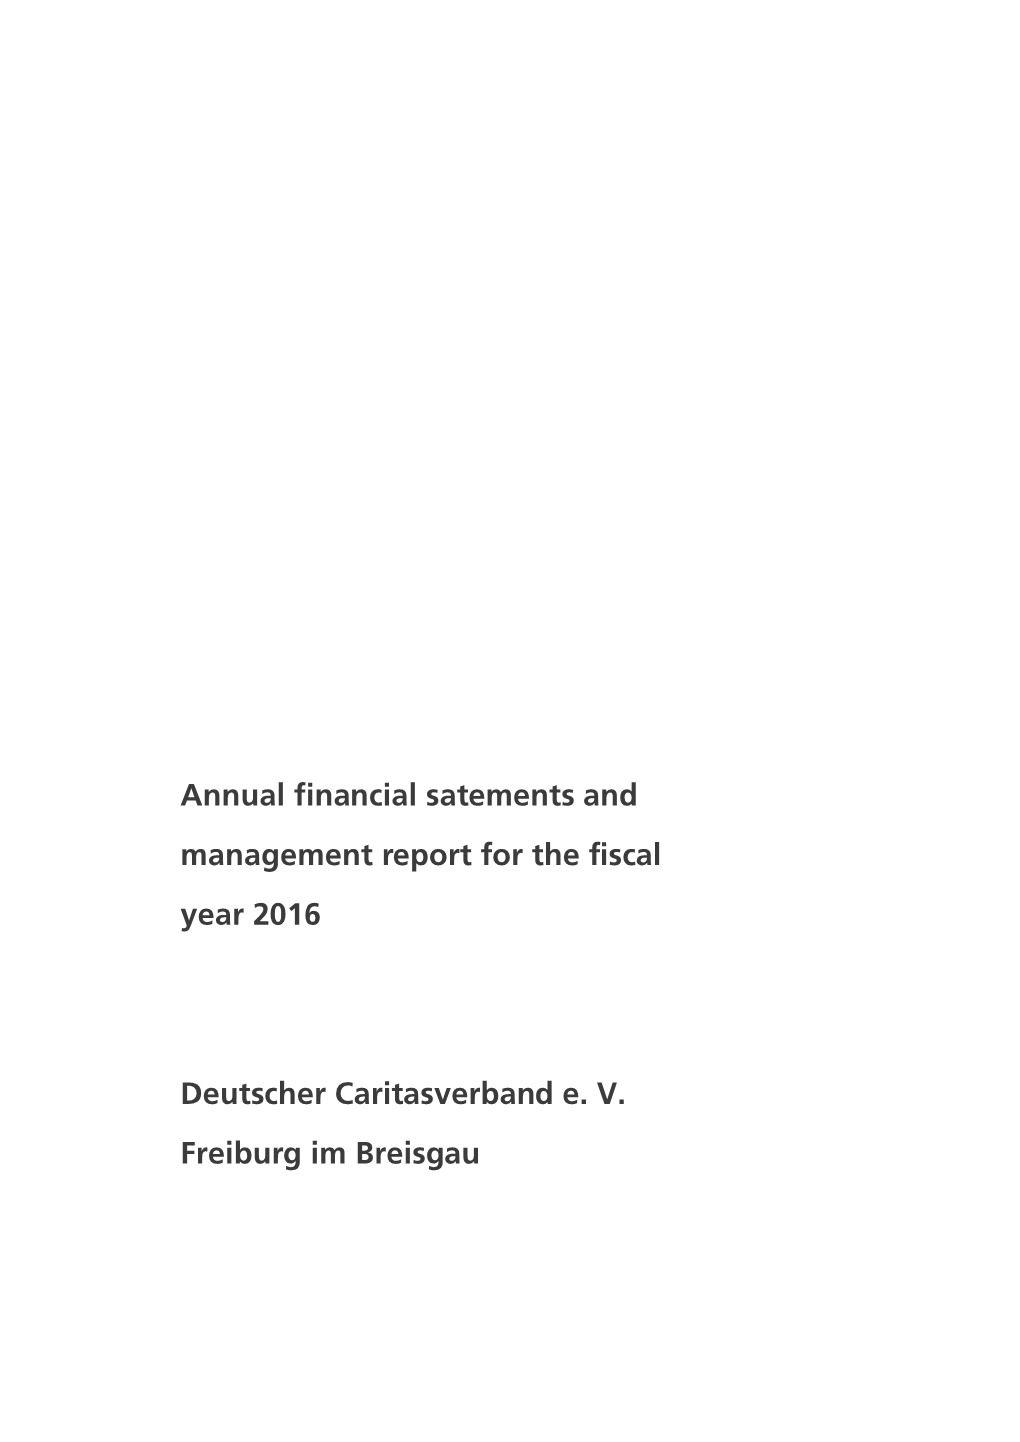 Annual Financial Satements and Management Report for the Fiscal Year 2016 Deutscher Caritasverband E. V. Freiburg Im Breisgau